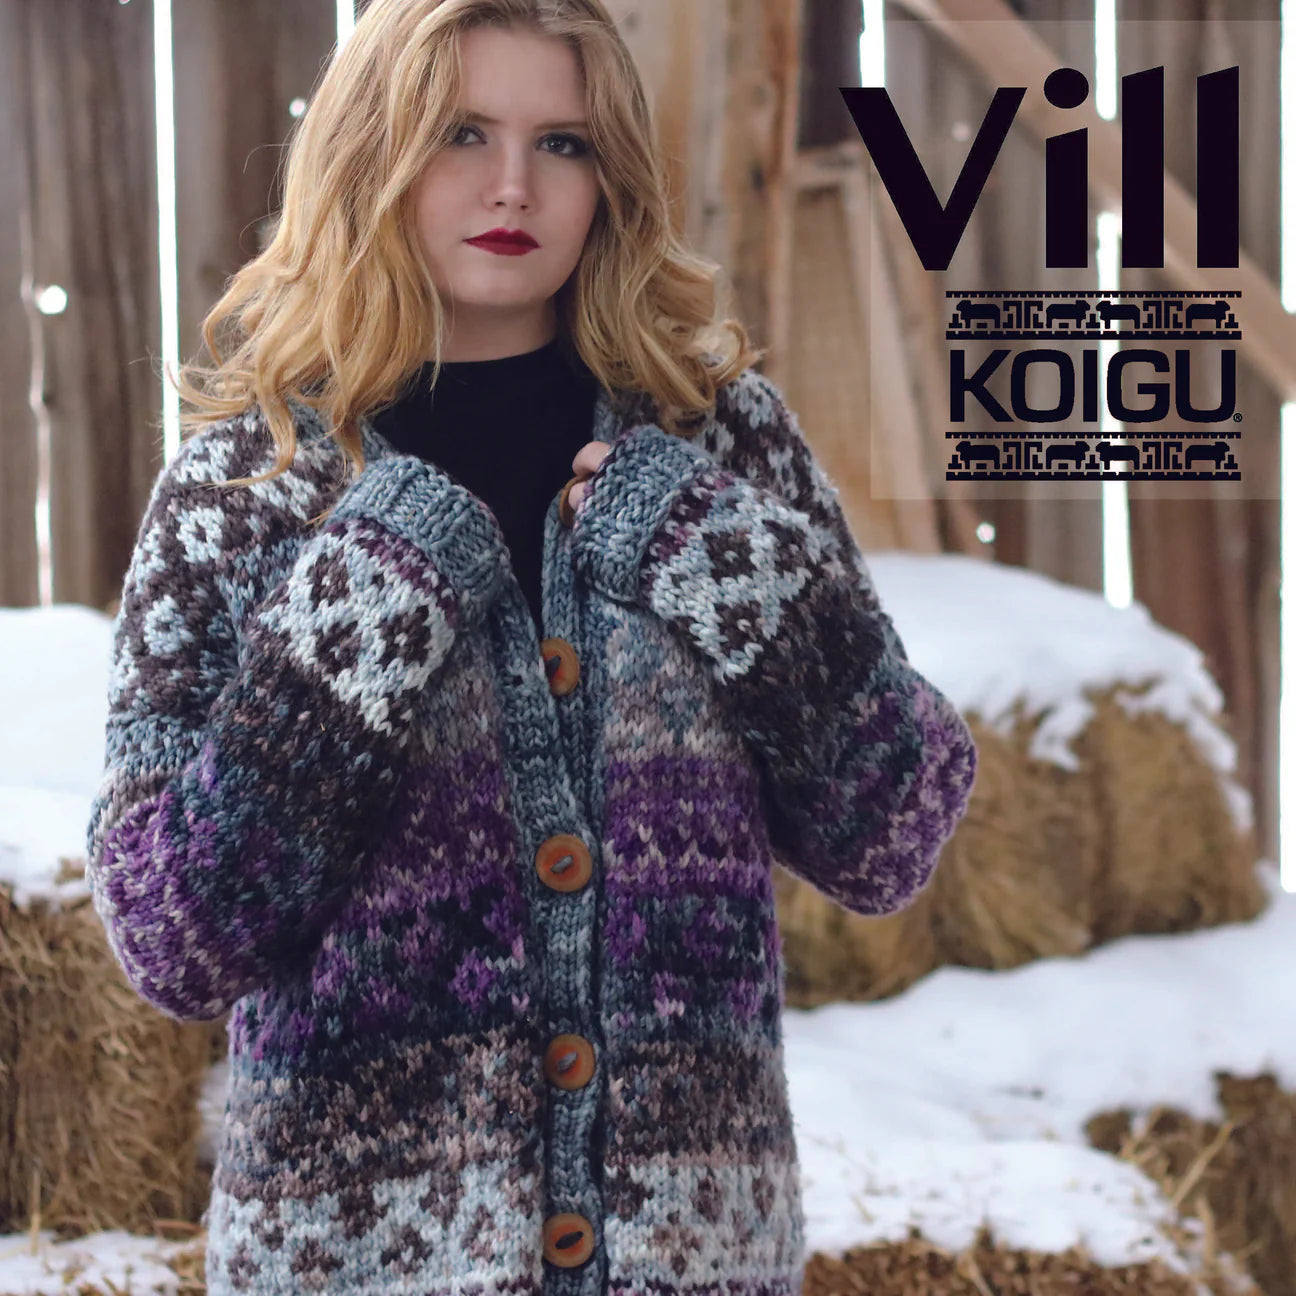 Vill Koigu Magazine